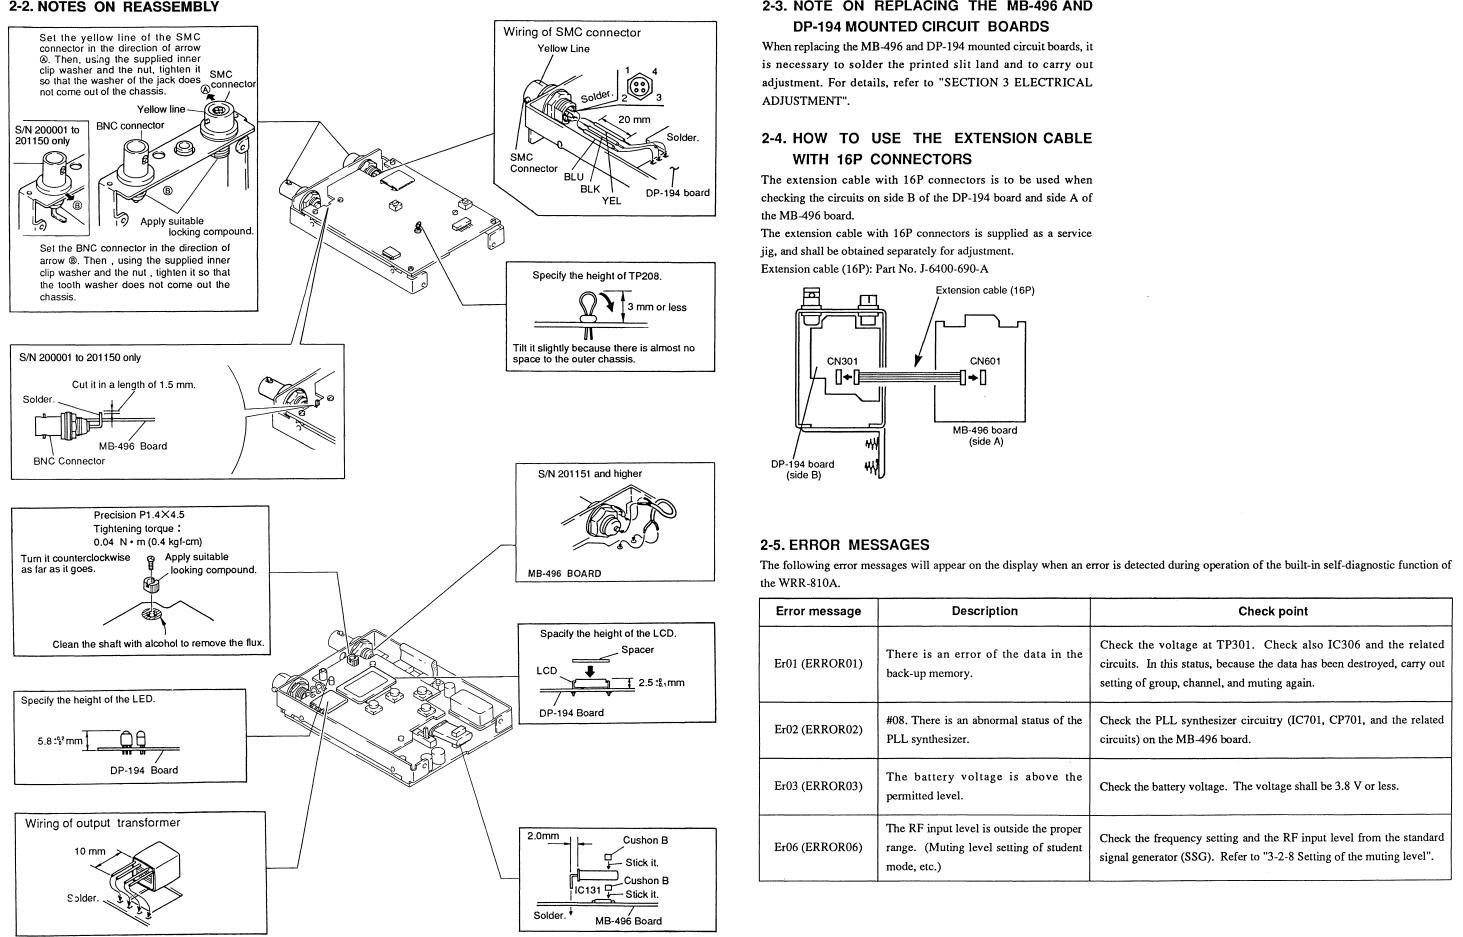 Sony WRR-810-A Service manual